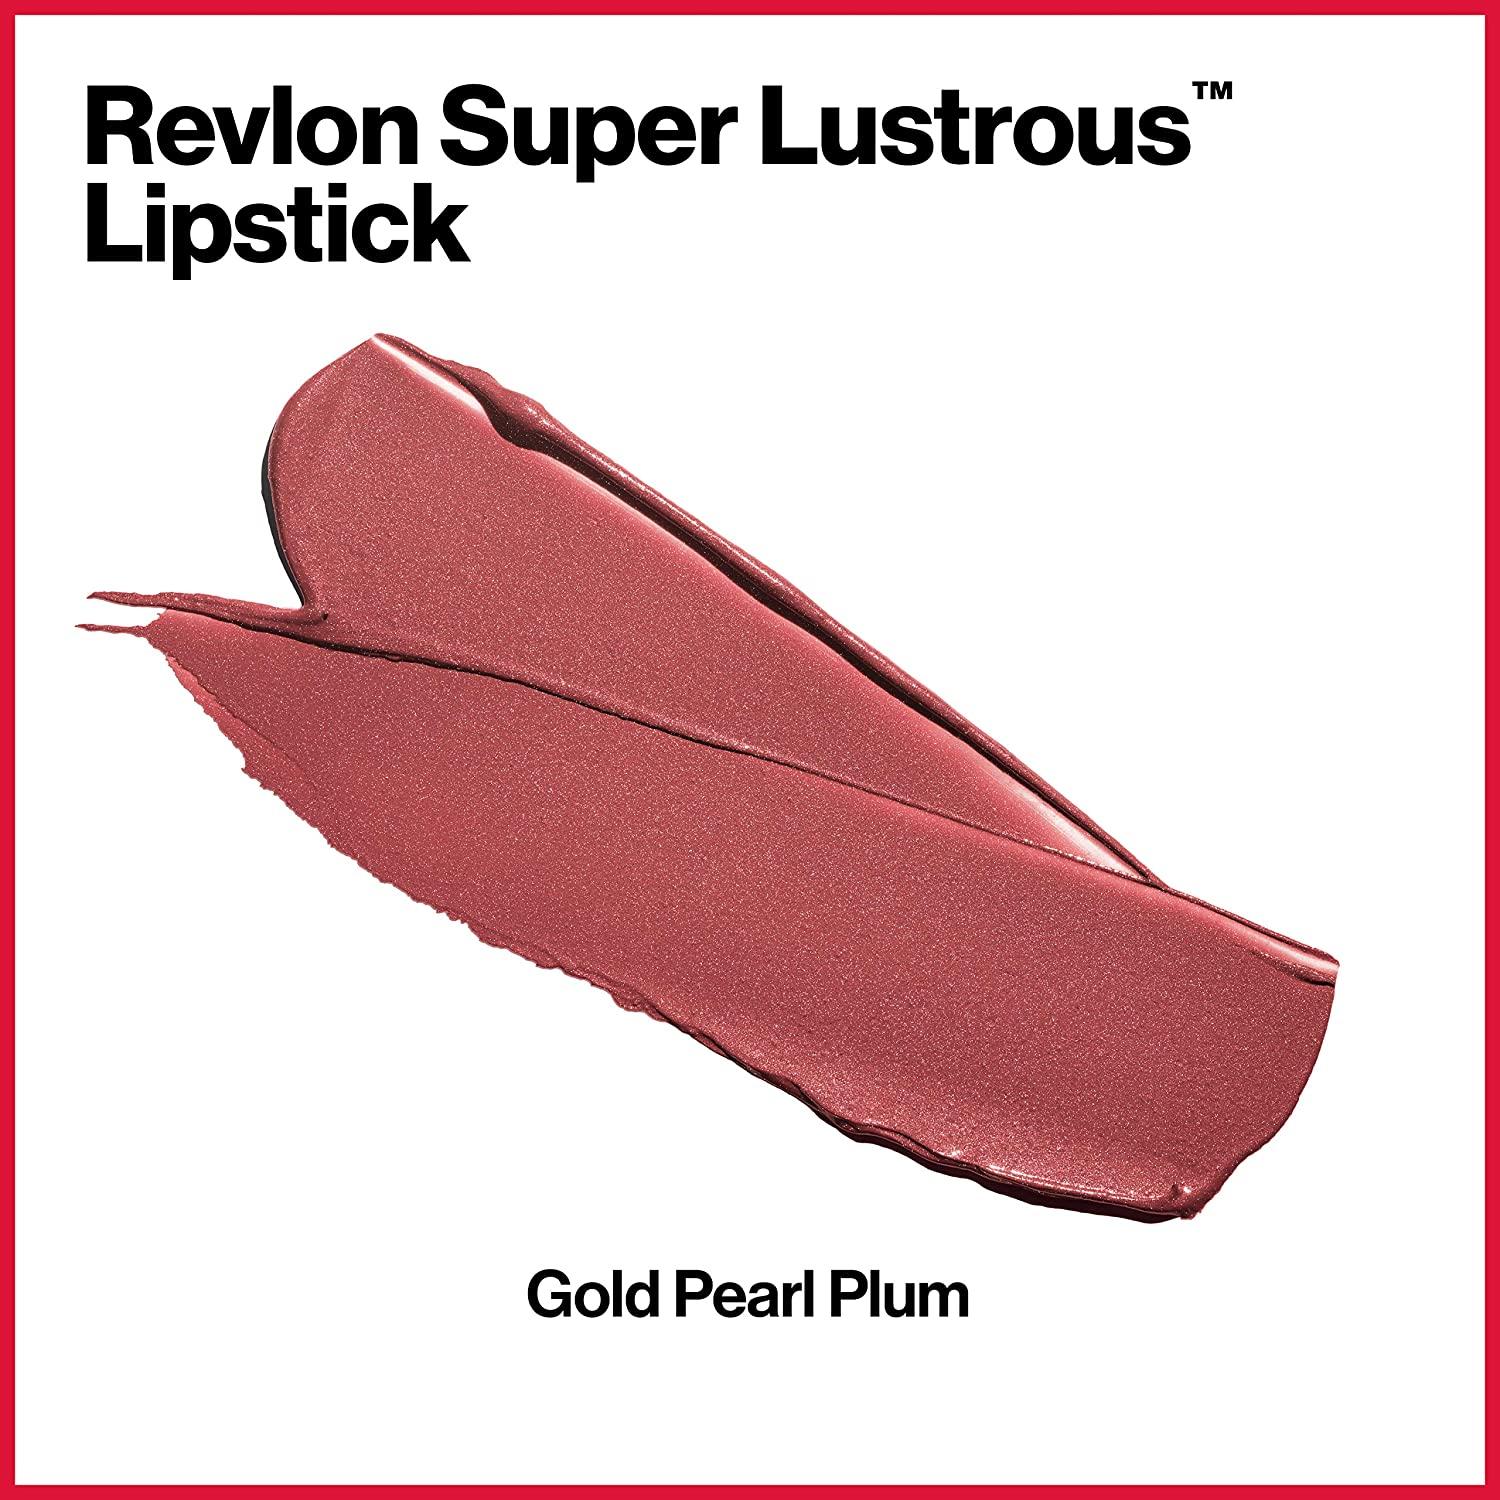 revlon plum baby lipstick